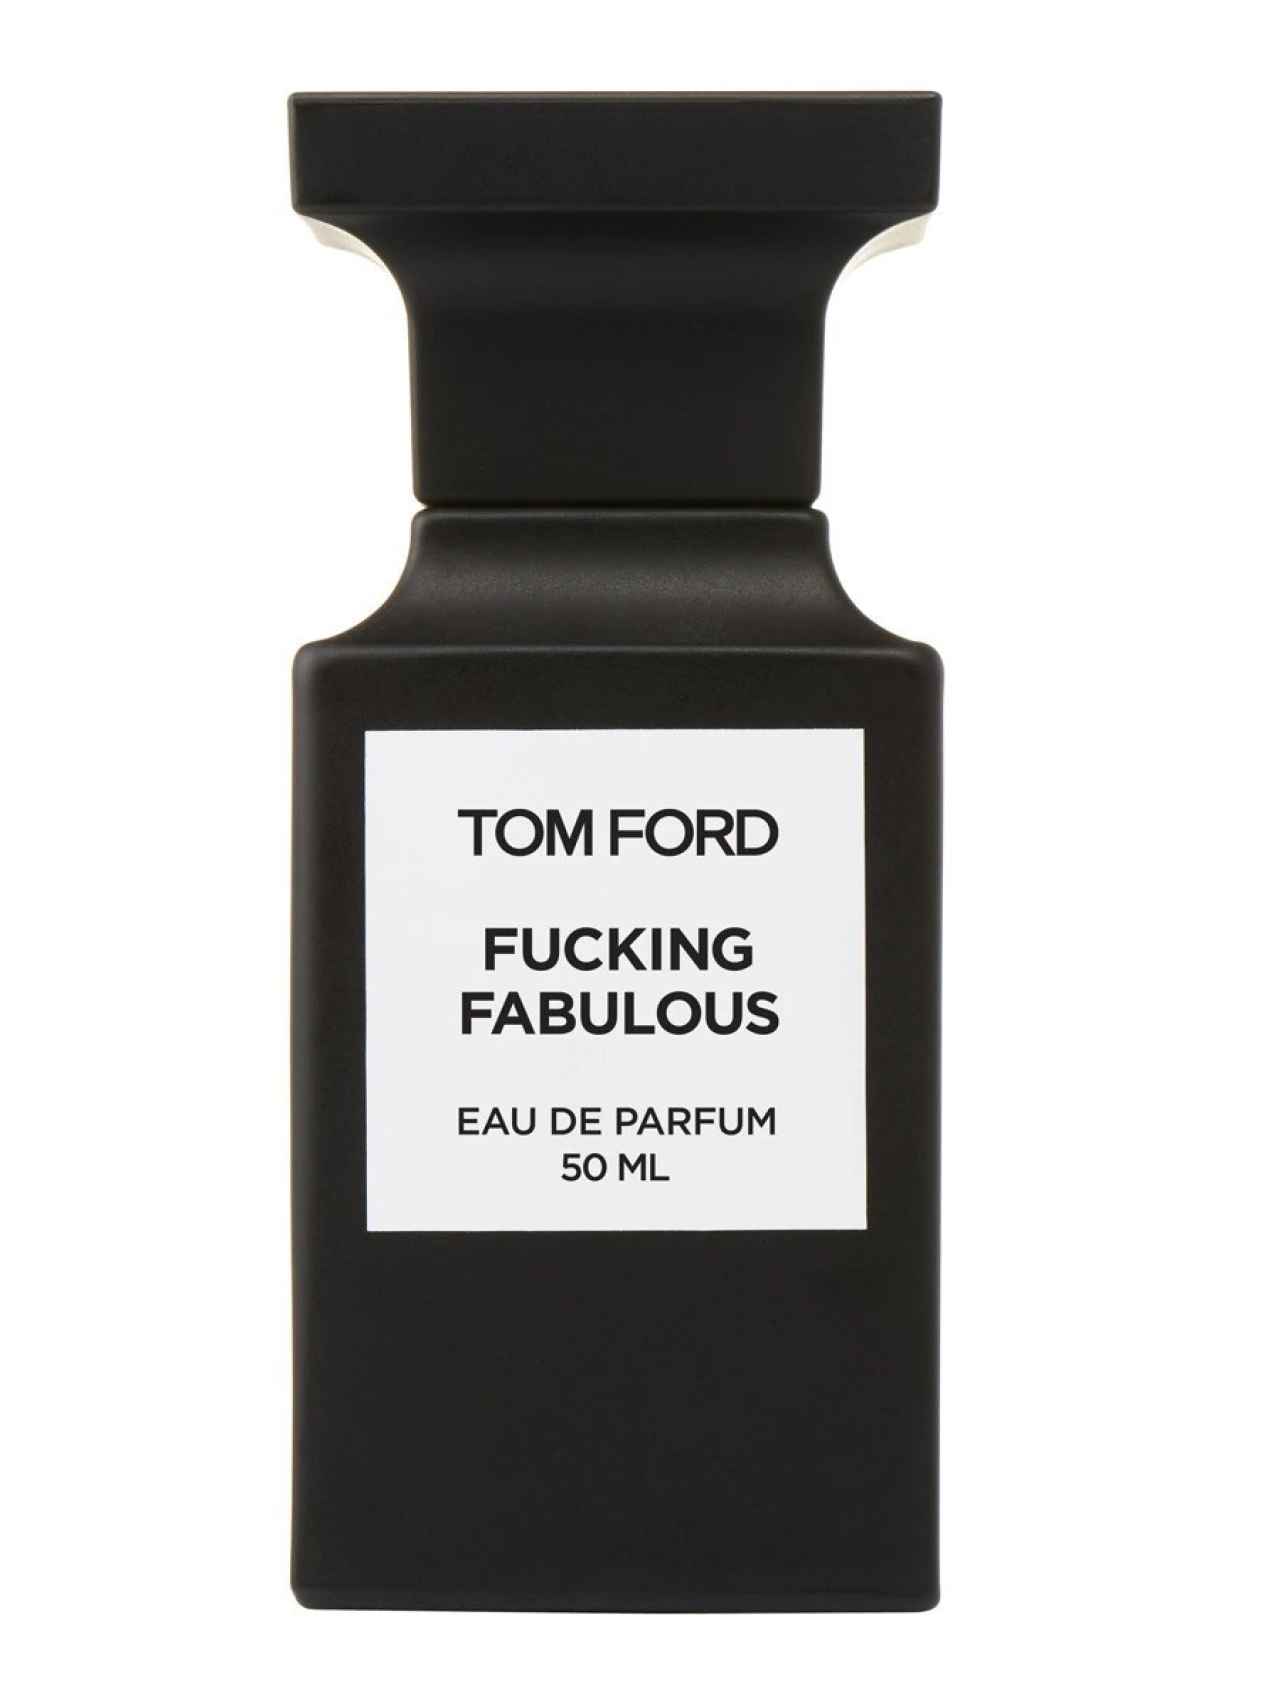 Perfume que Tom Ford presentó en 2017.